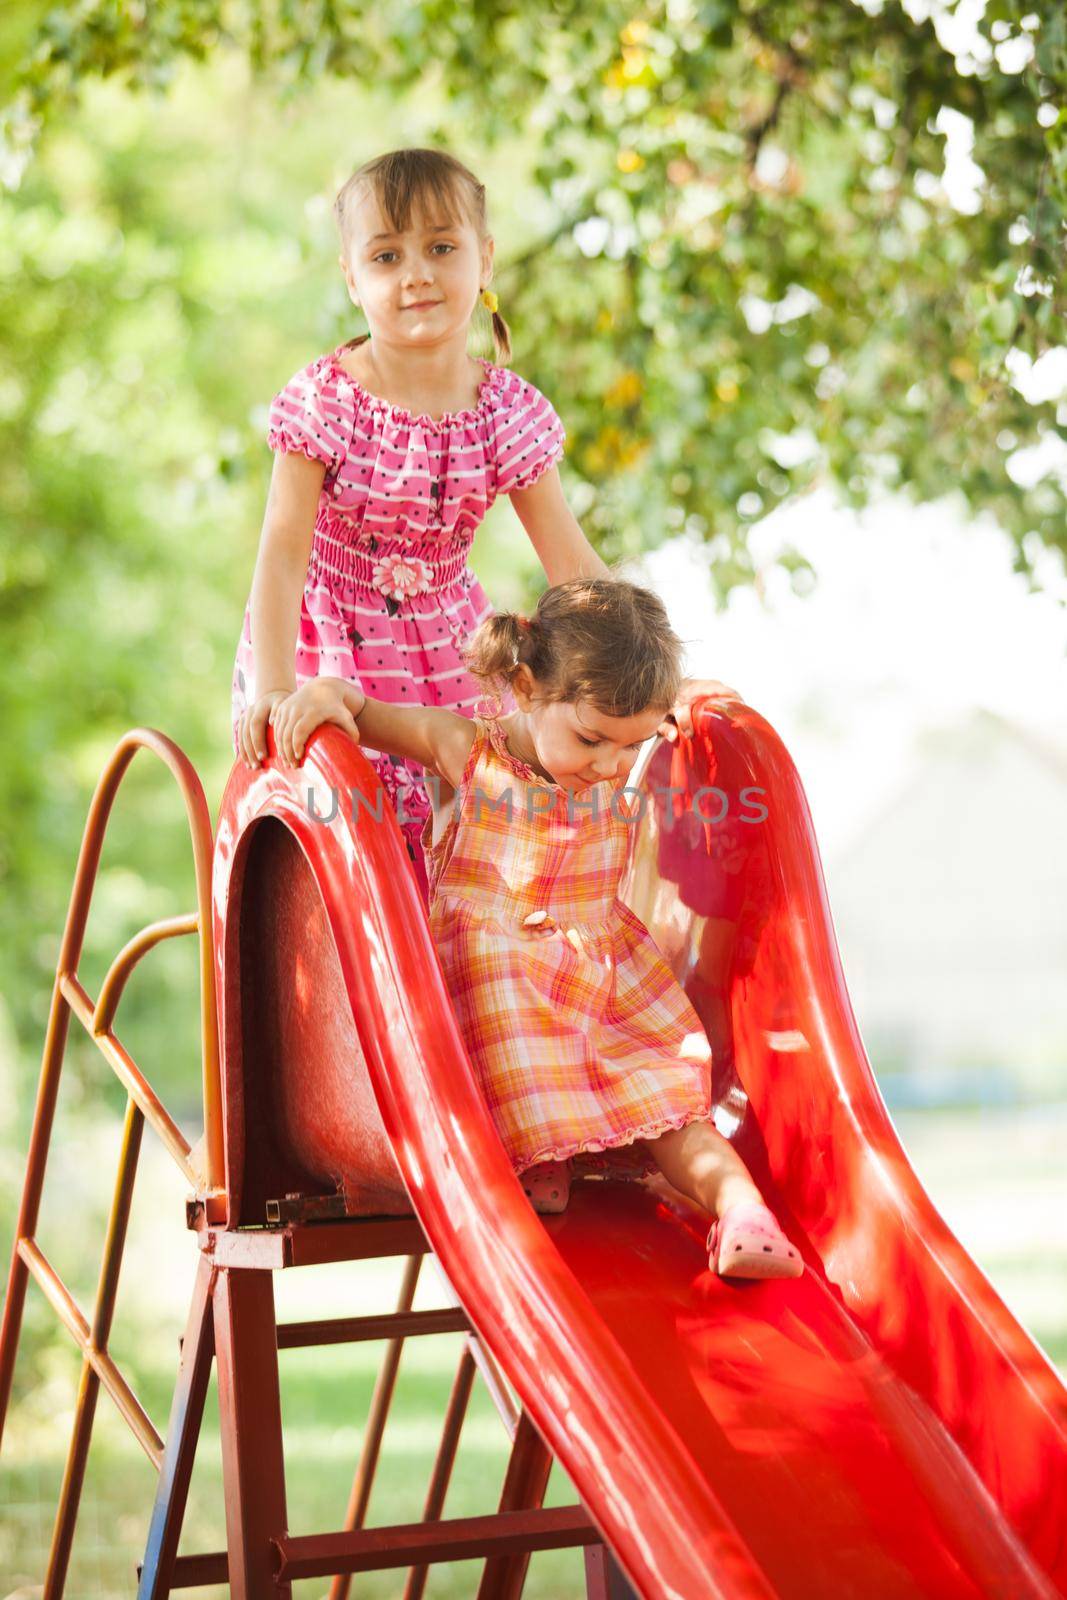 girls on the slide by oksix